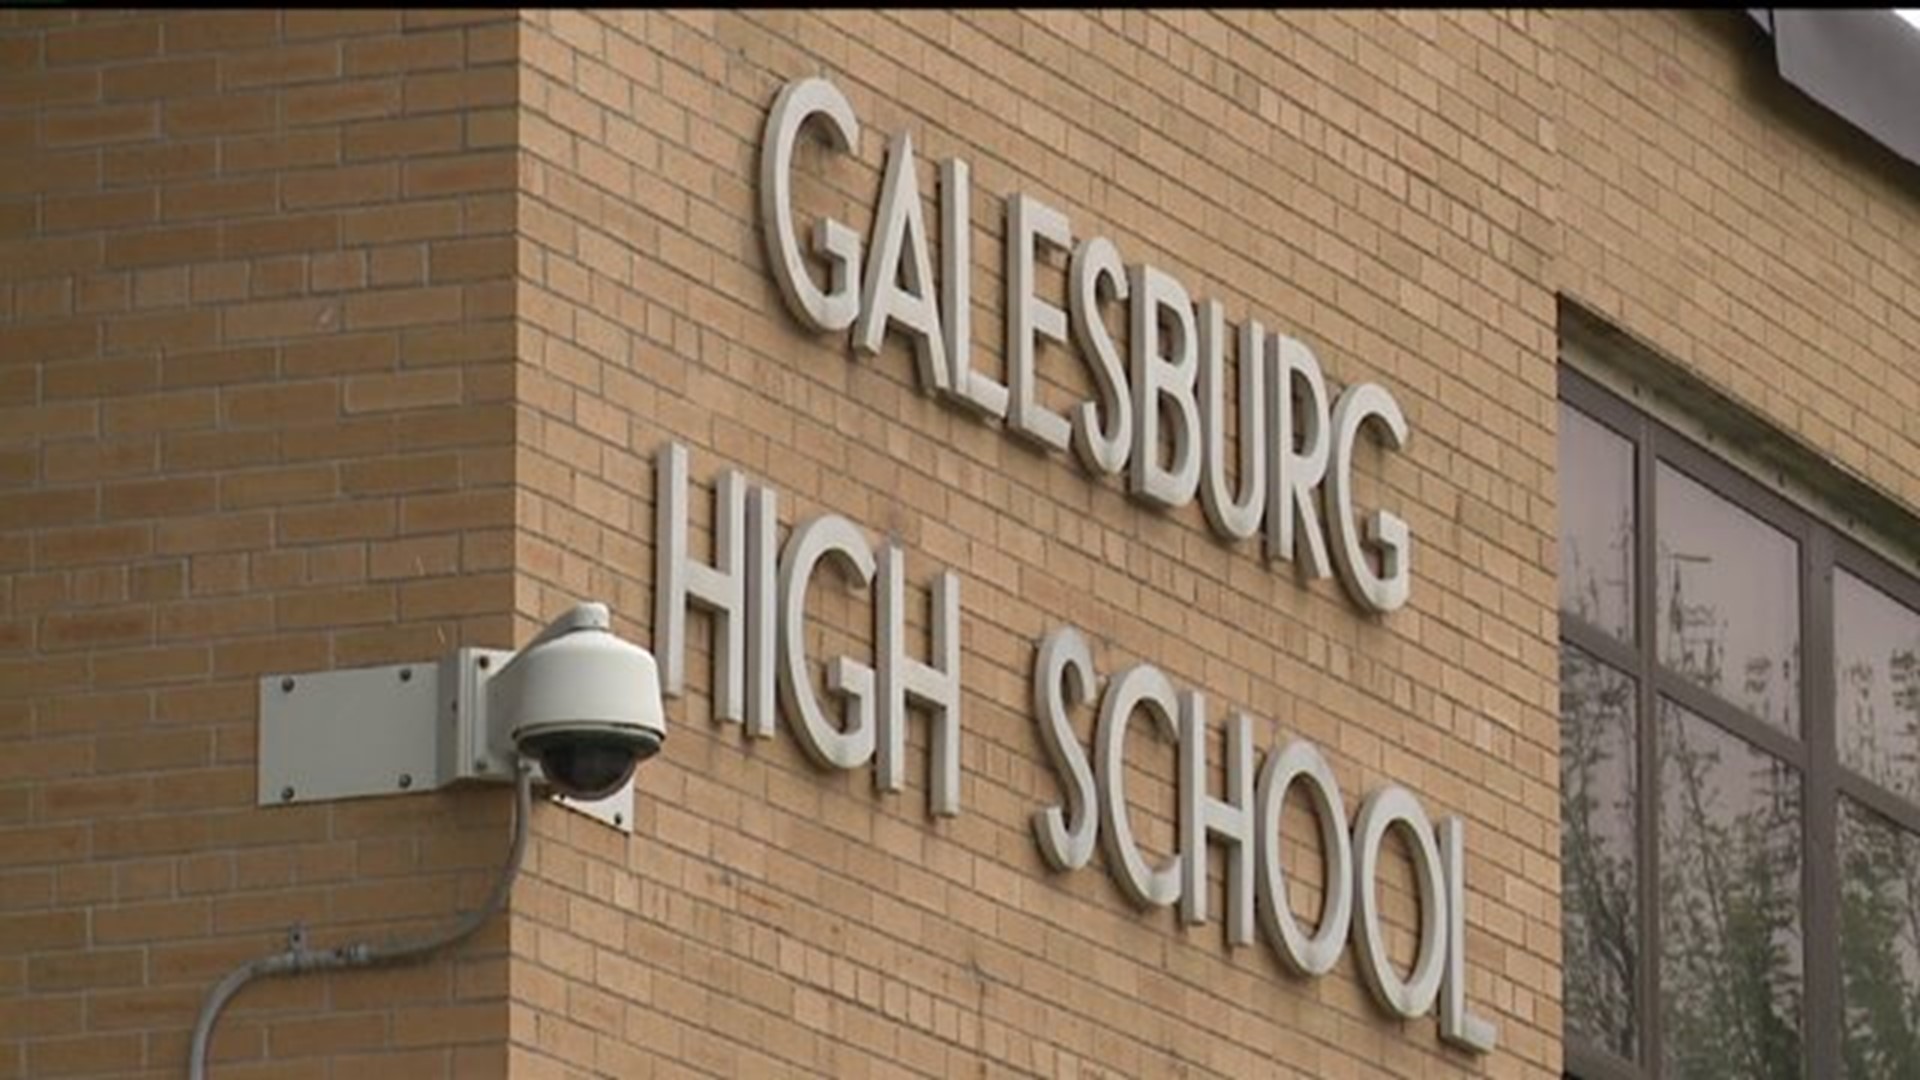 Galesburg teacher strike ends, classes resume